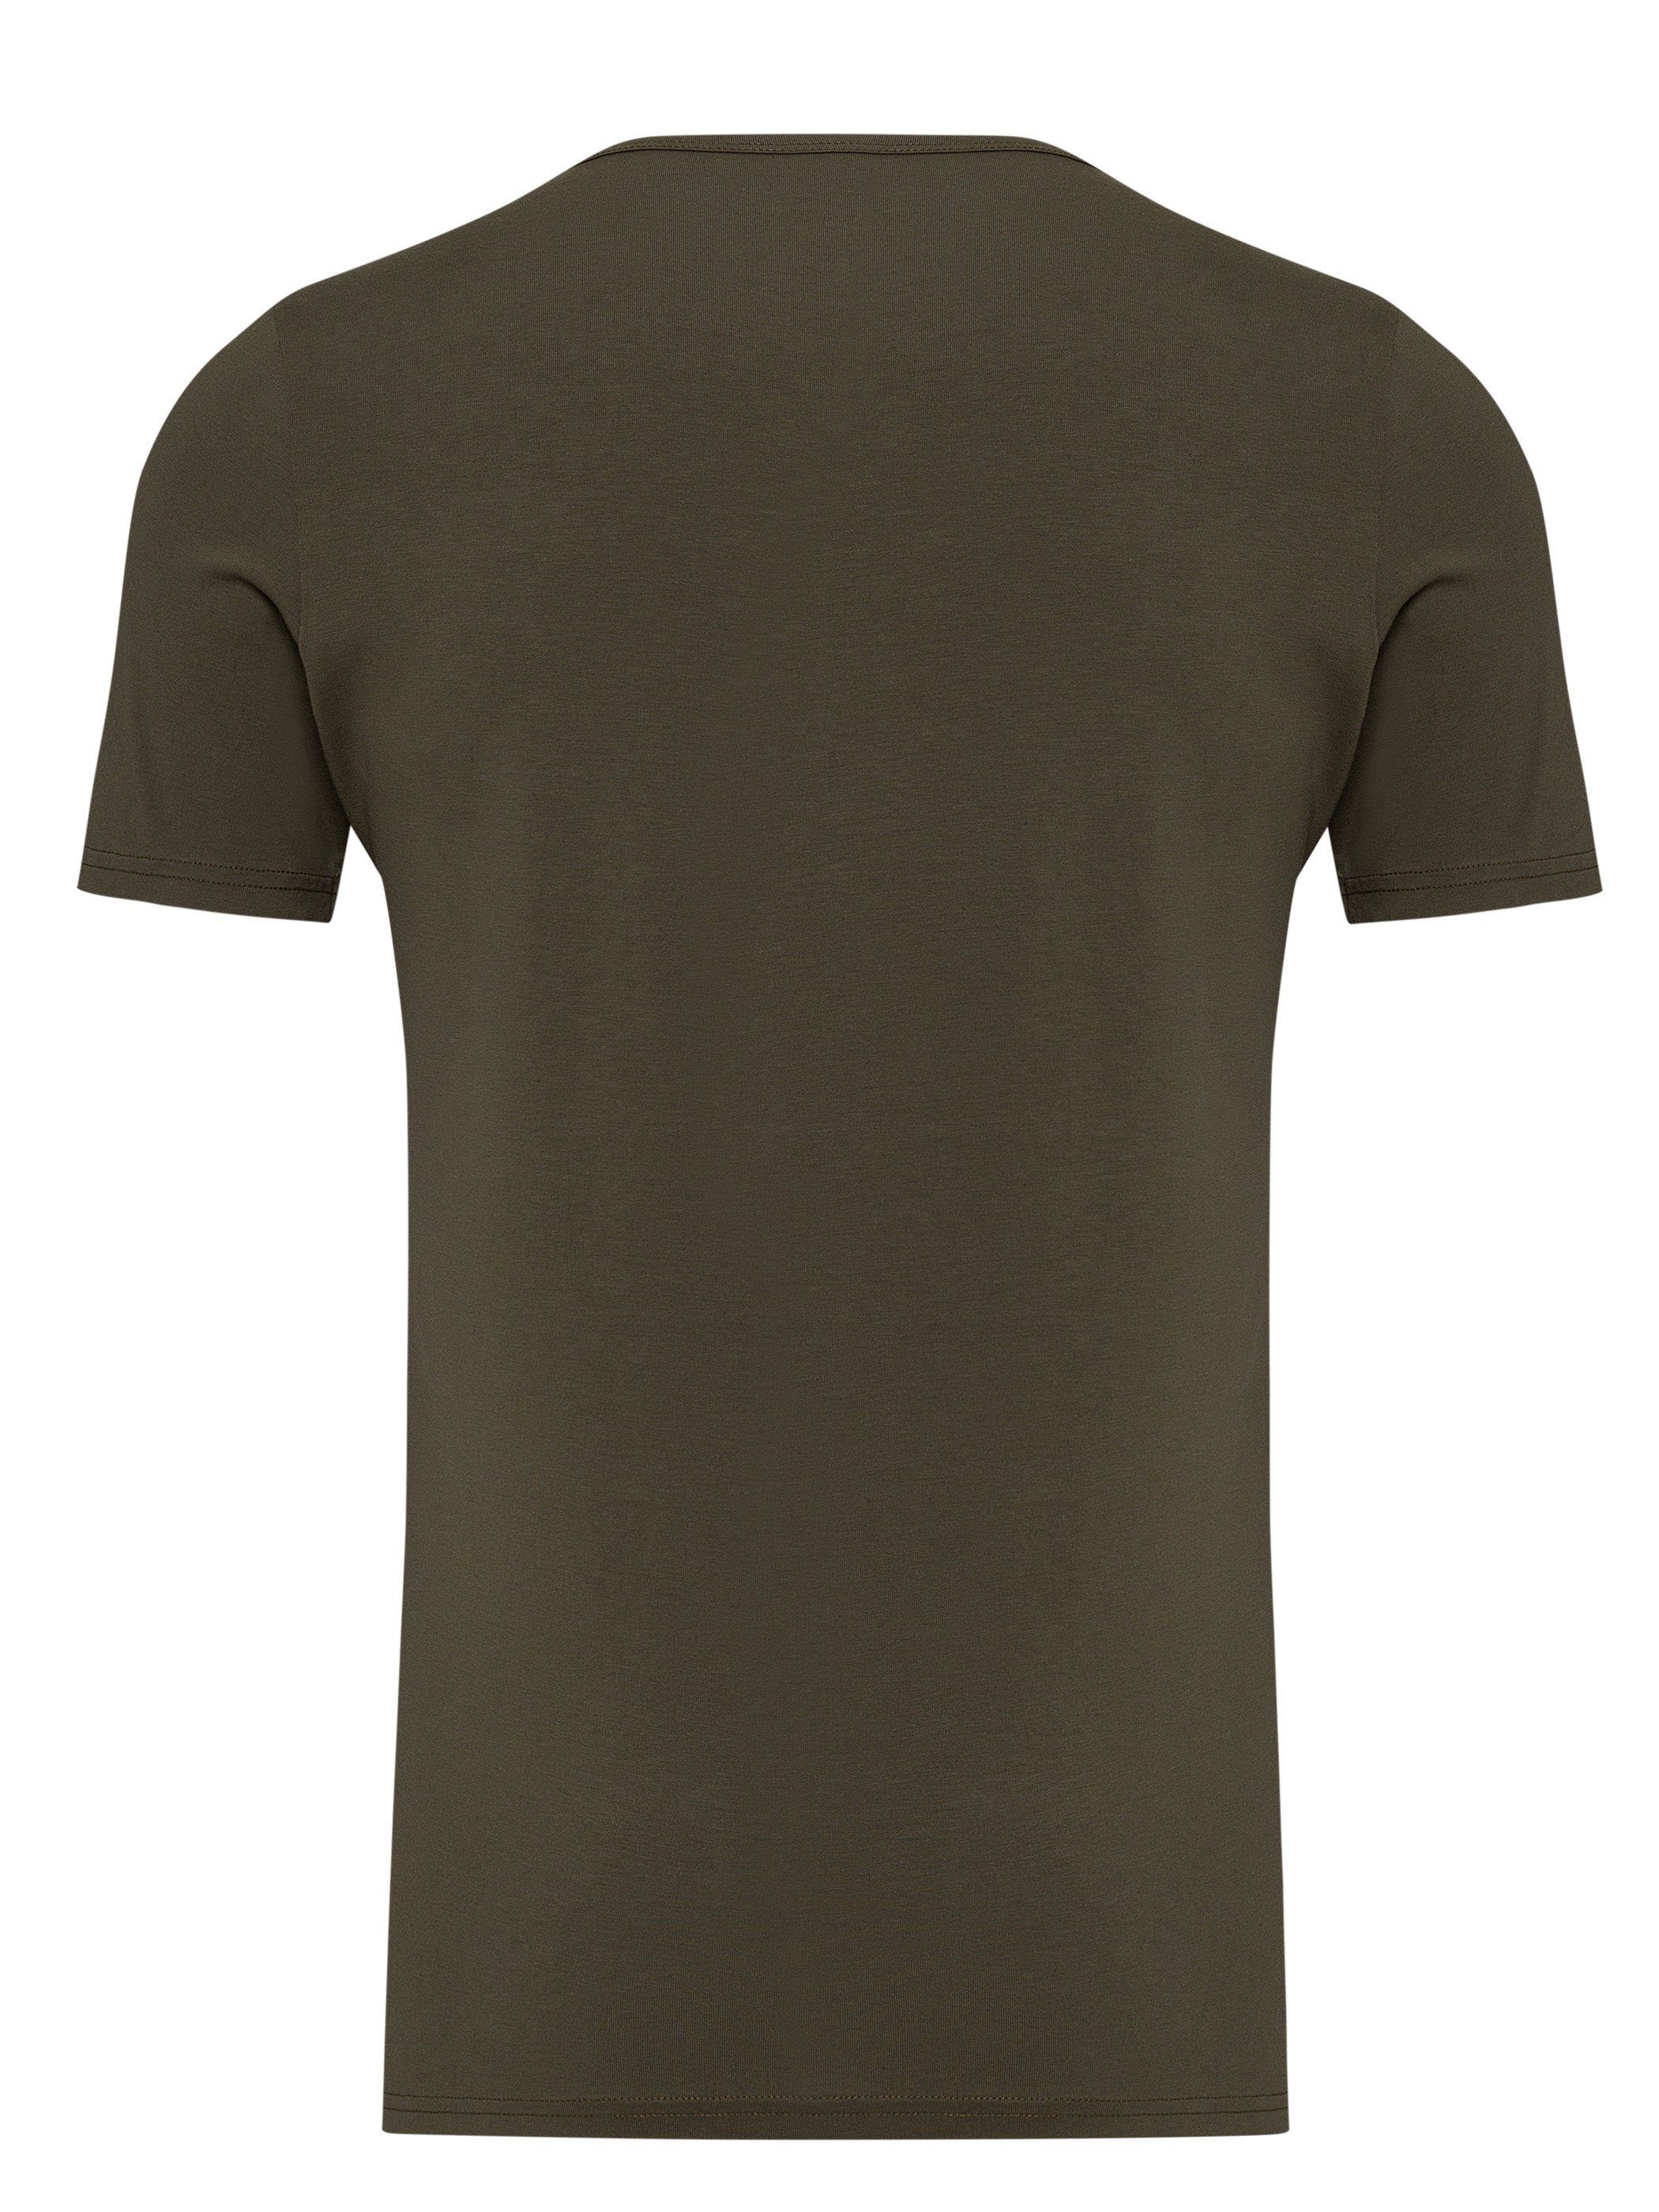 T-Shirt modernes Basic Neck (kalamata Mythic Yazubi Rundhalsshirt 3-Pack Crew (Set) Grün 190510) T-Shirt